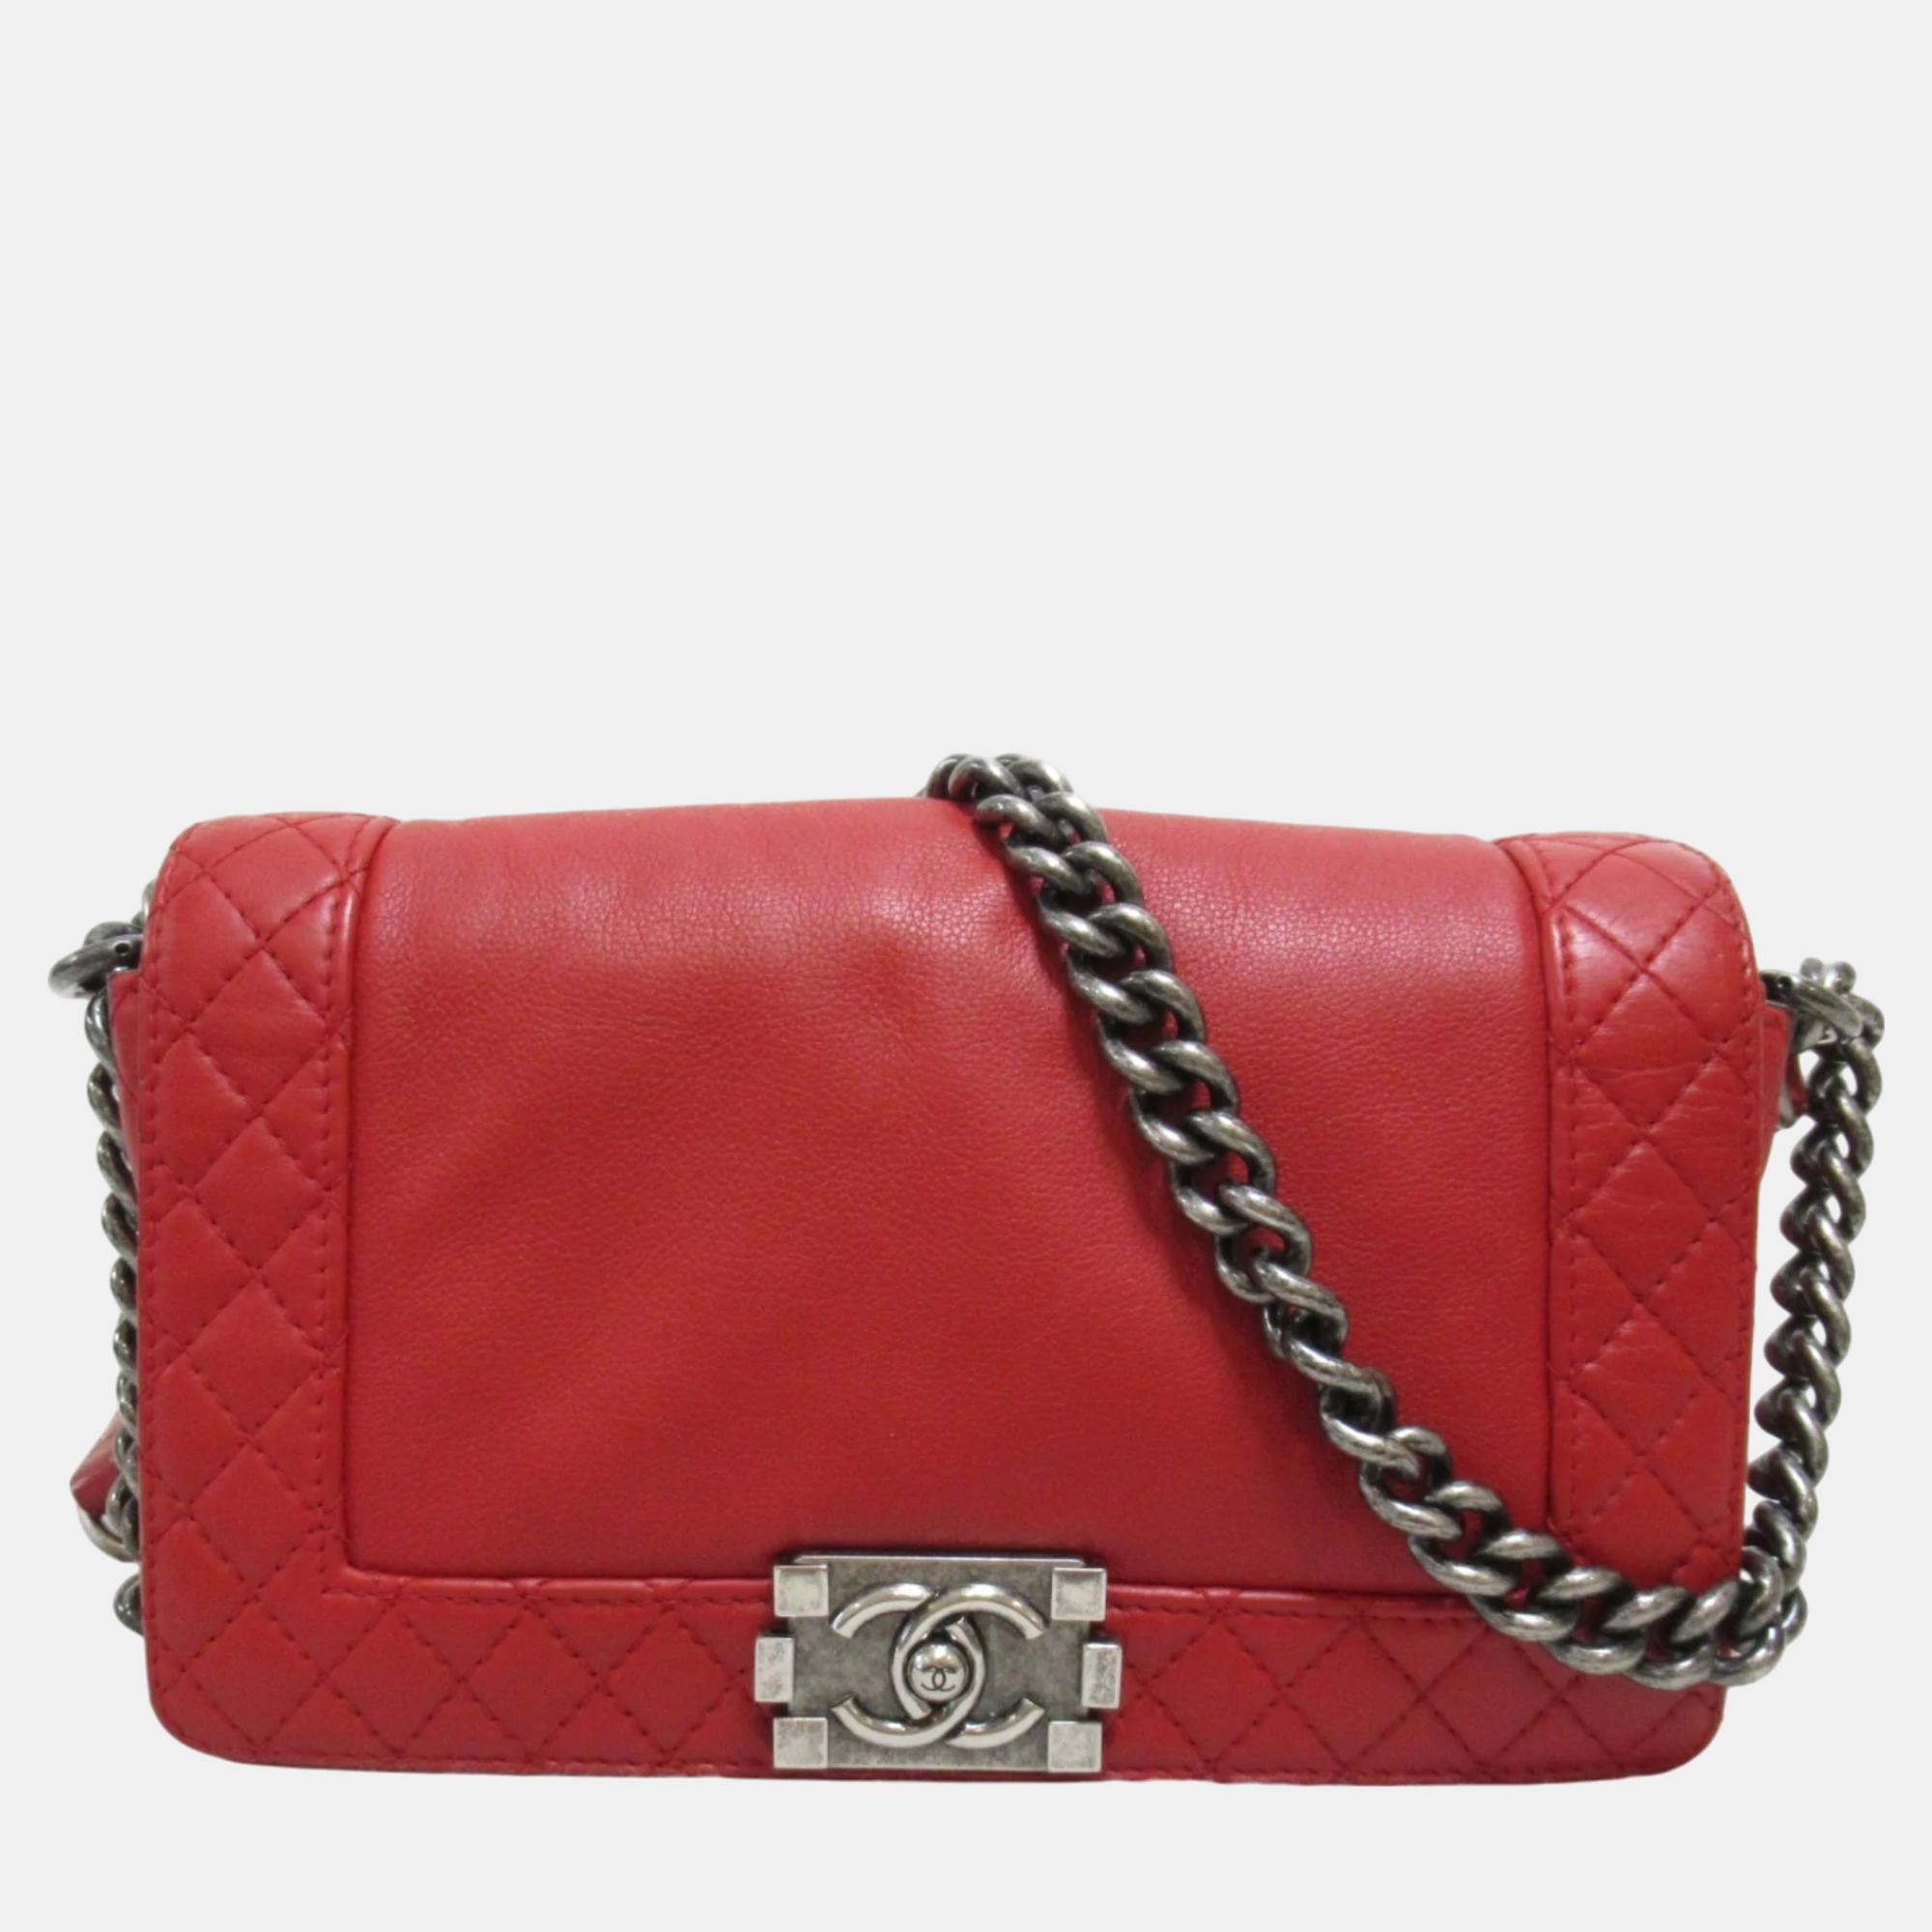 Chanel red leather medium reverso boy bag